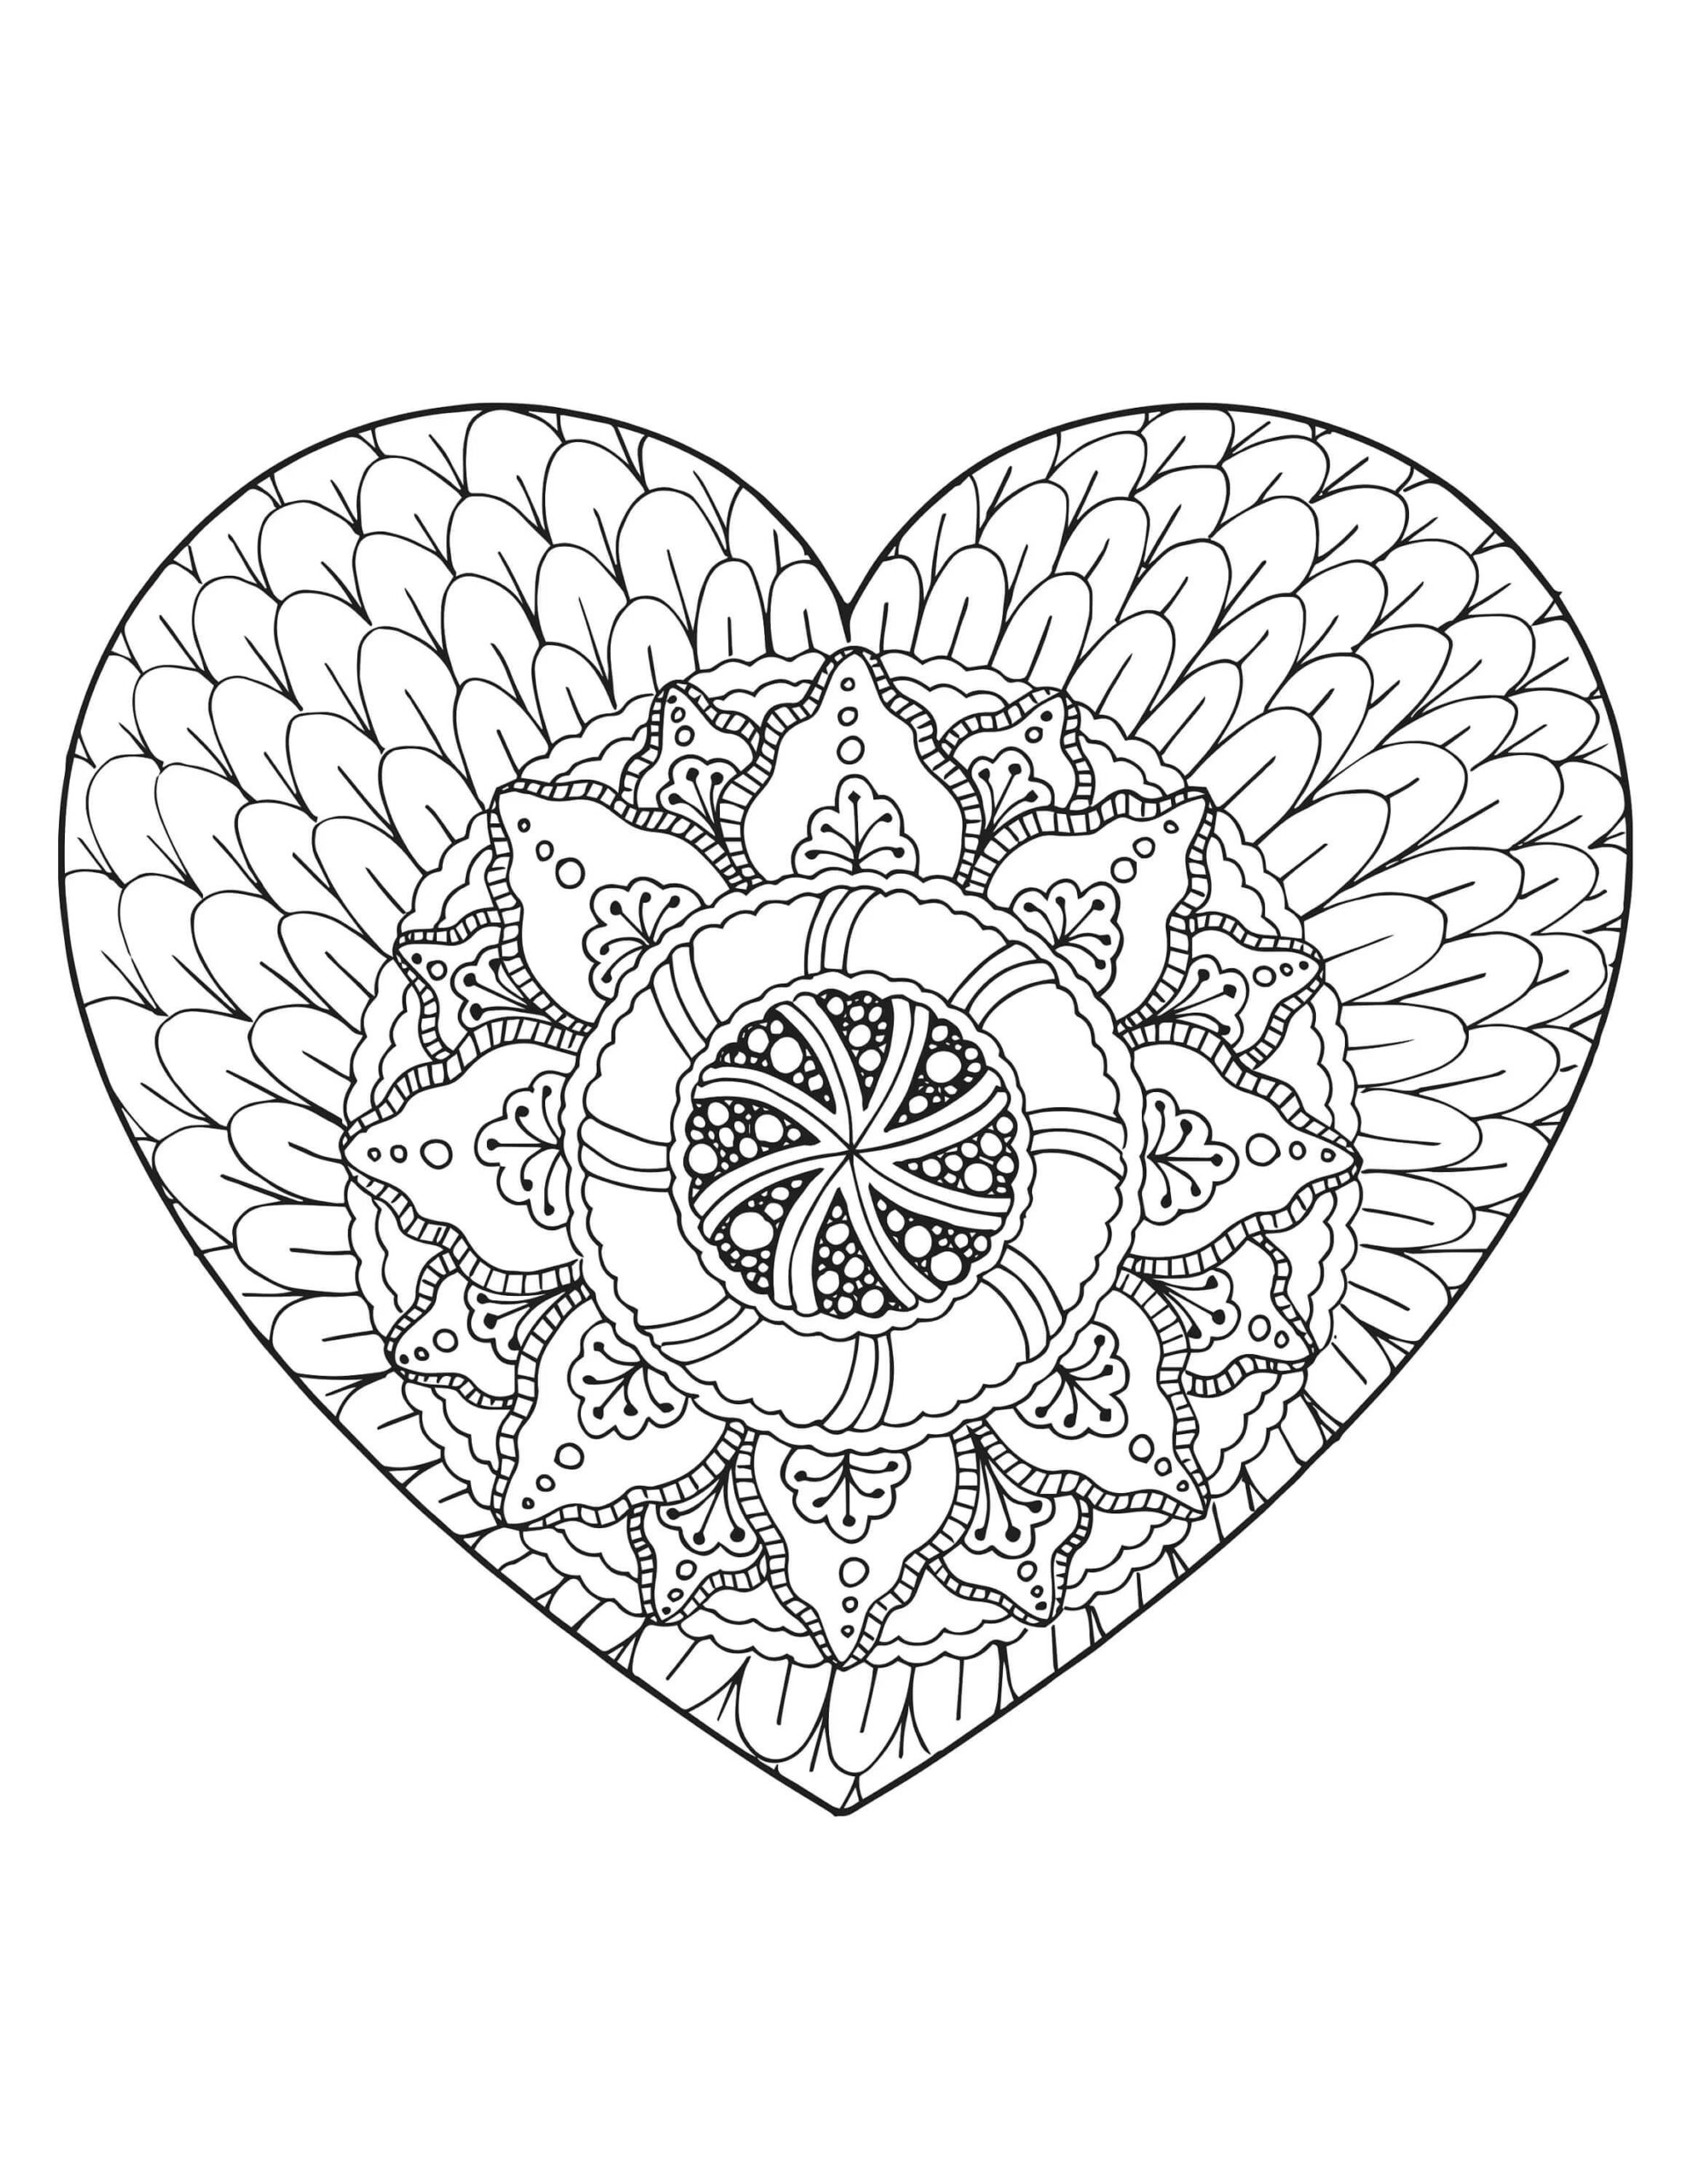 Mandala Heart Coloring Page - Sheet 12 Mandalas